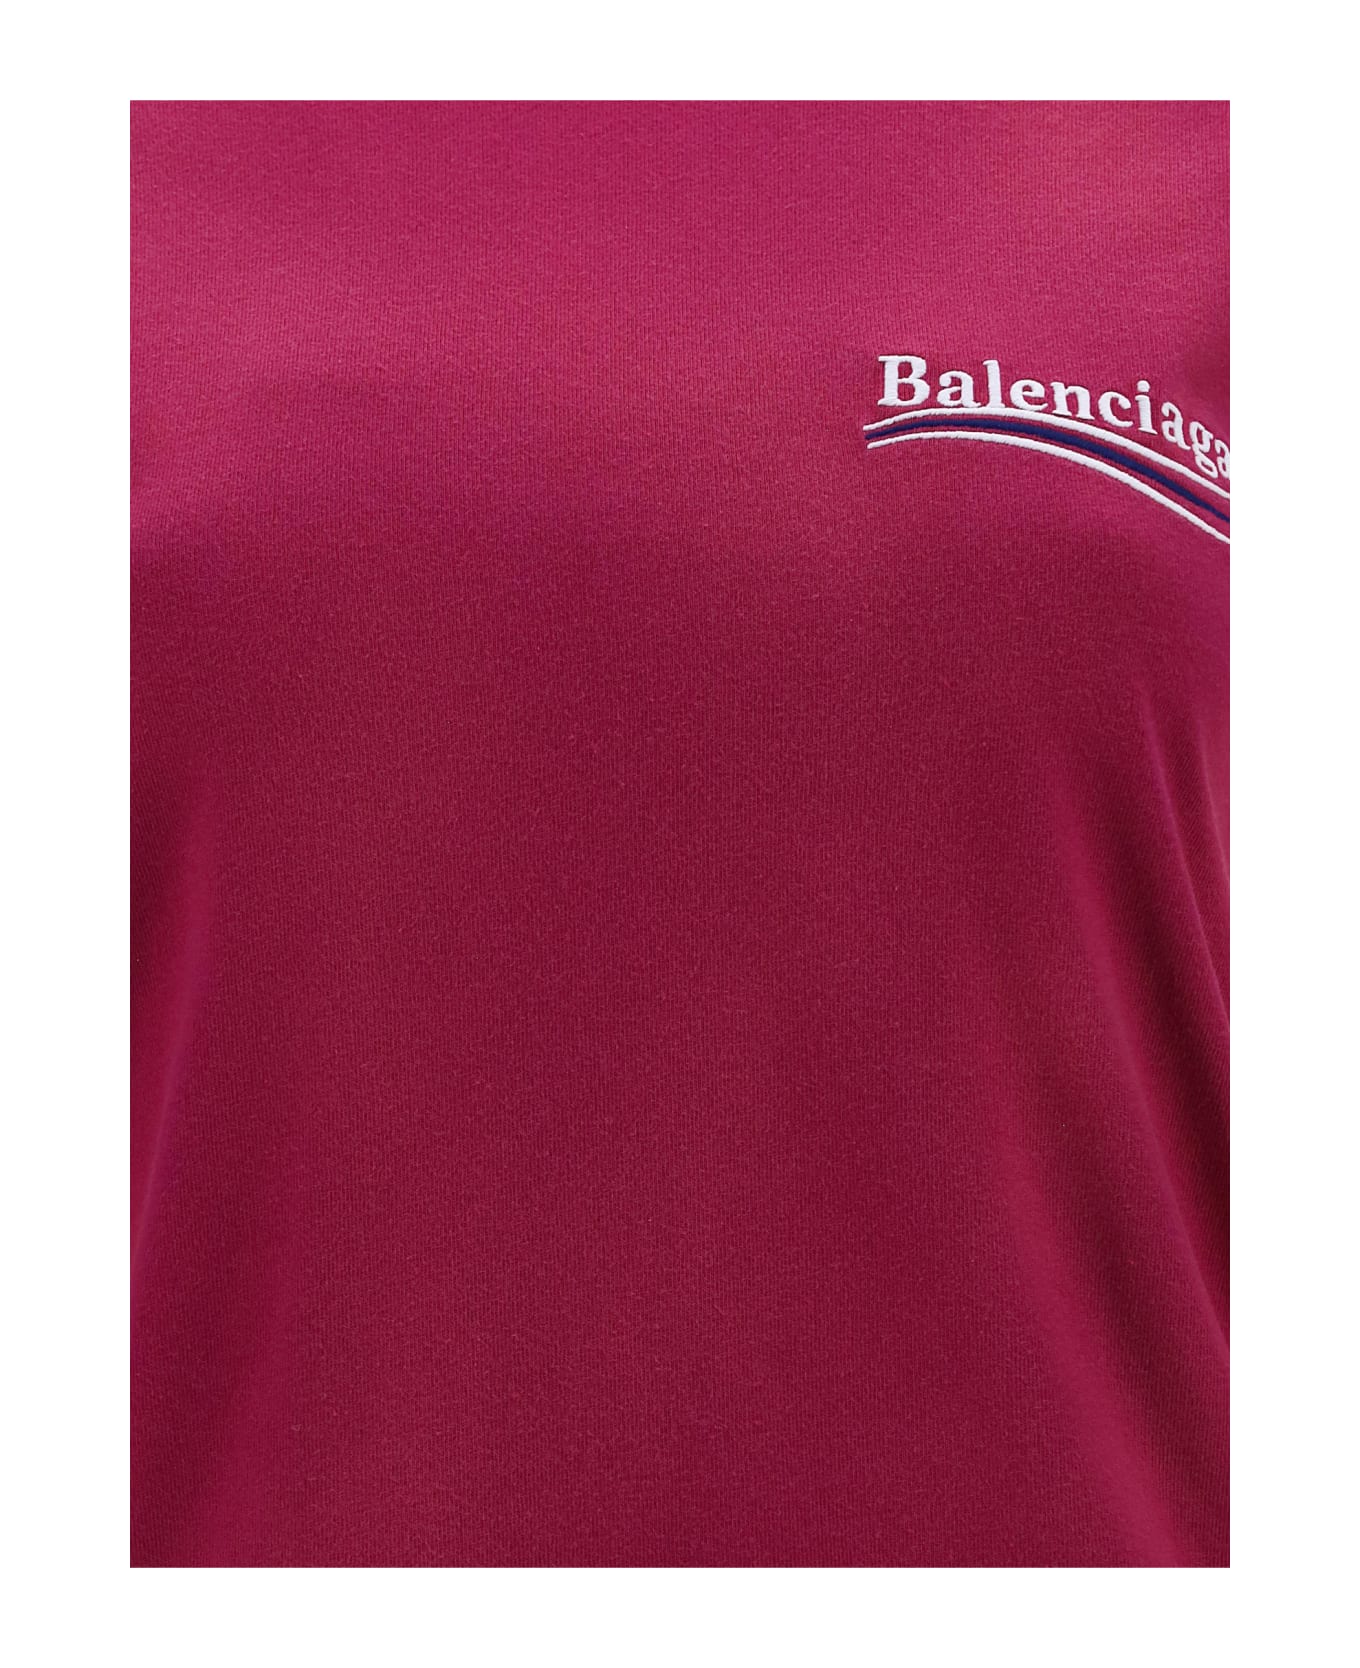 Balenciaga T-shirt - Dark Fuchsia/wt/blu